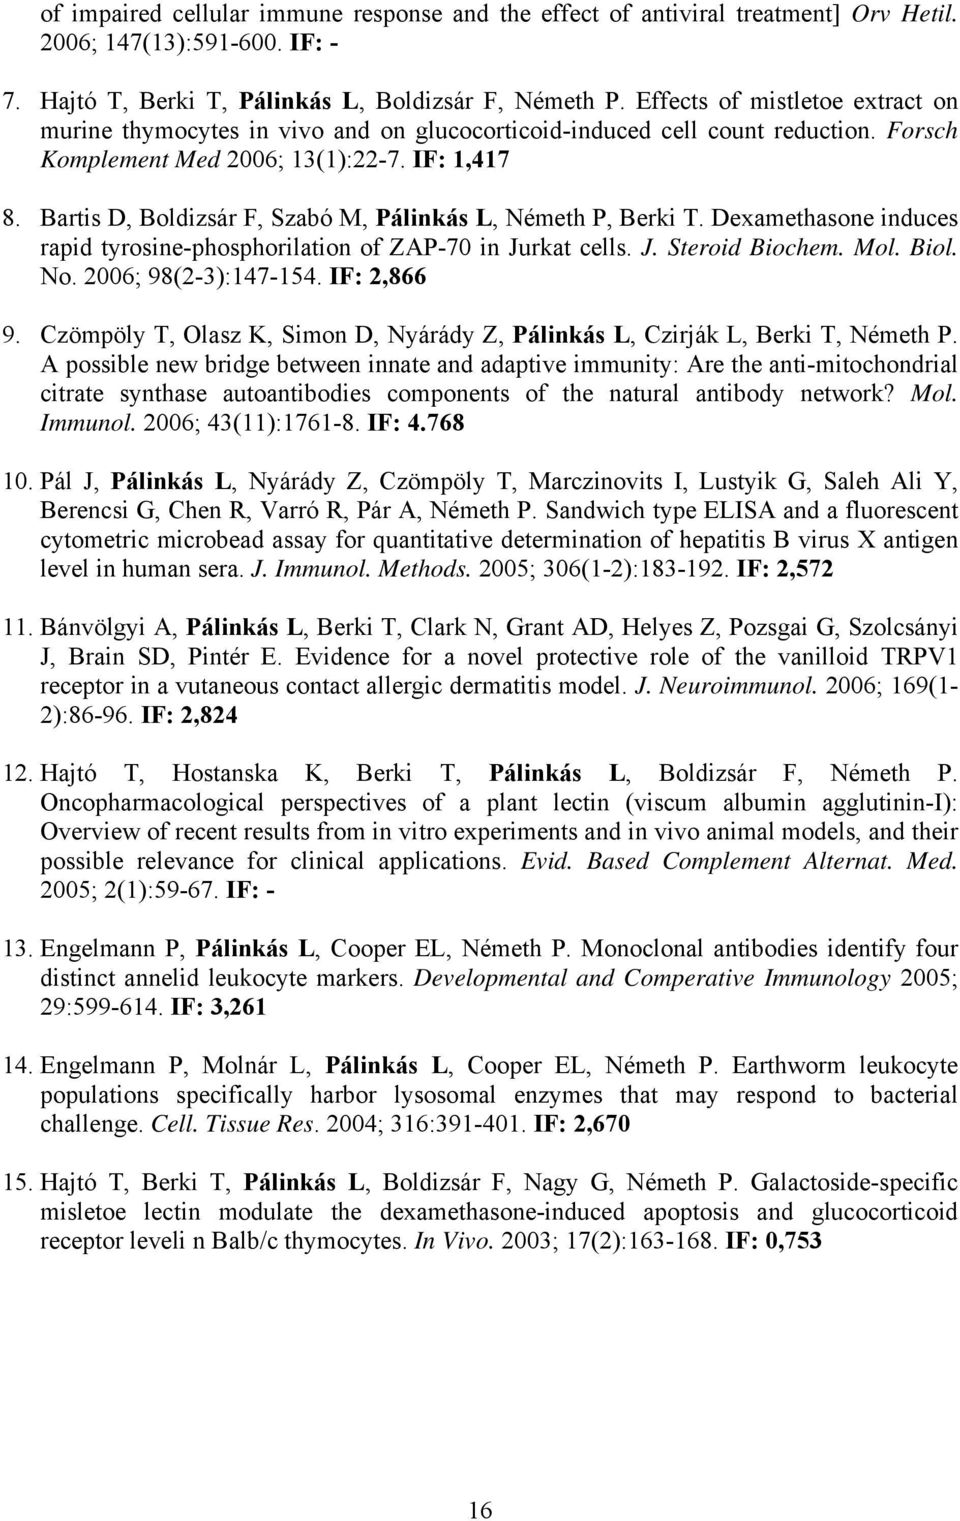 Bartis D, Boldizsár F, Szabó M, Pálinkás L, Németh P, Berki T. Dexamethasone induces rapid tyrosine-phosphorilation of ZAP-70 in Jurkat cells. J. Steroid Biochem. Mol. Biol. No. 2006; 98(2-3):147-154.